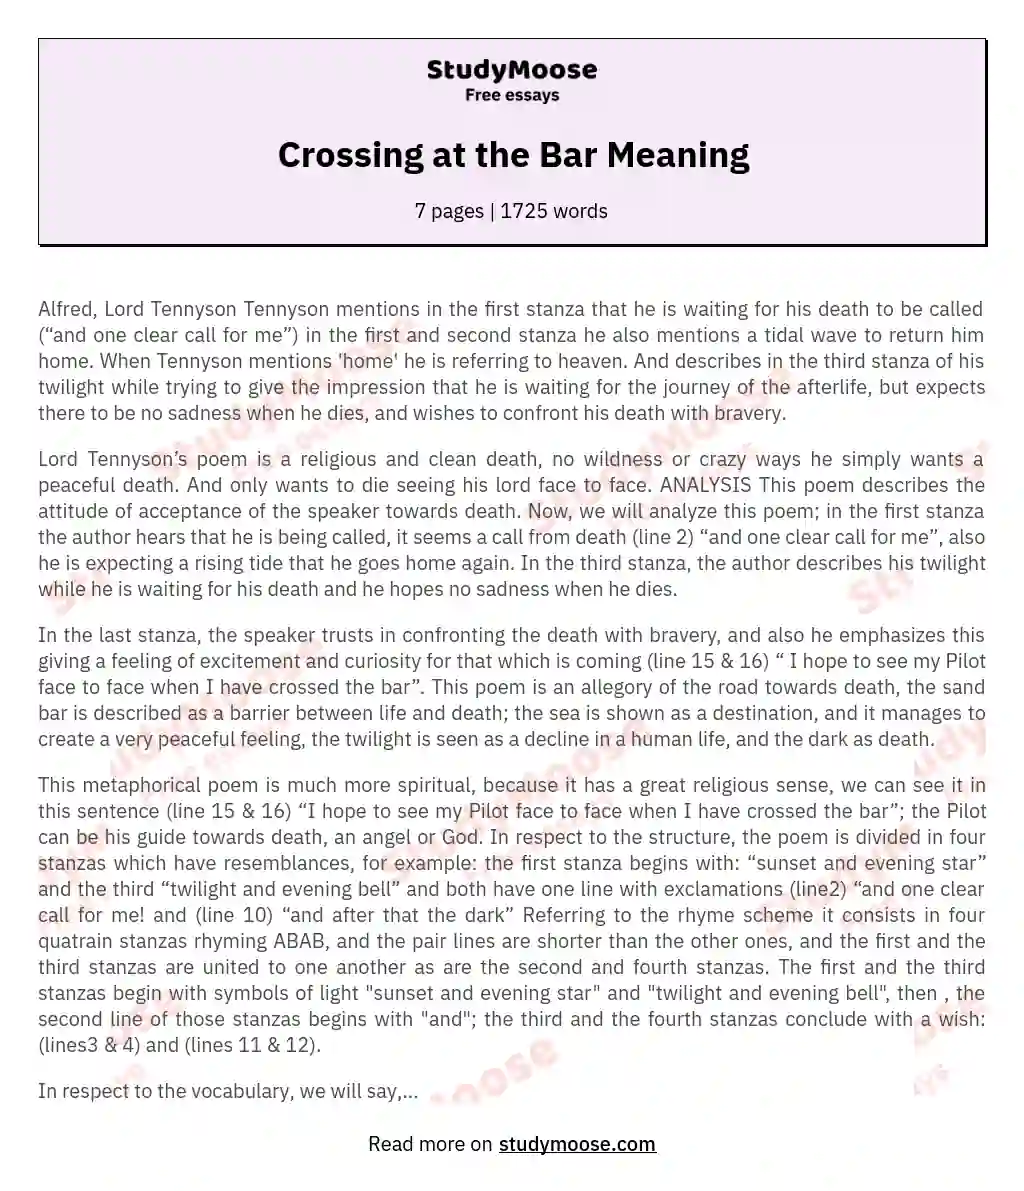 crossing the bar poem